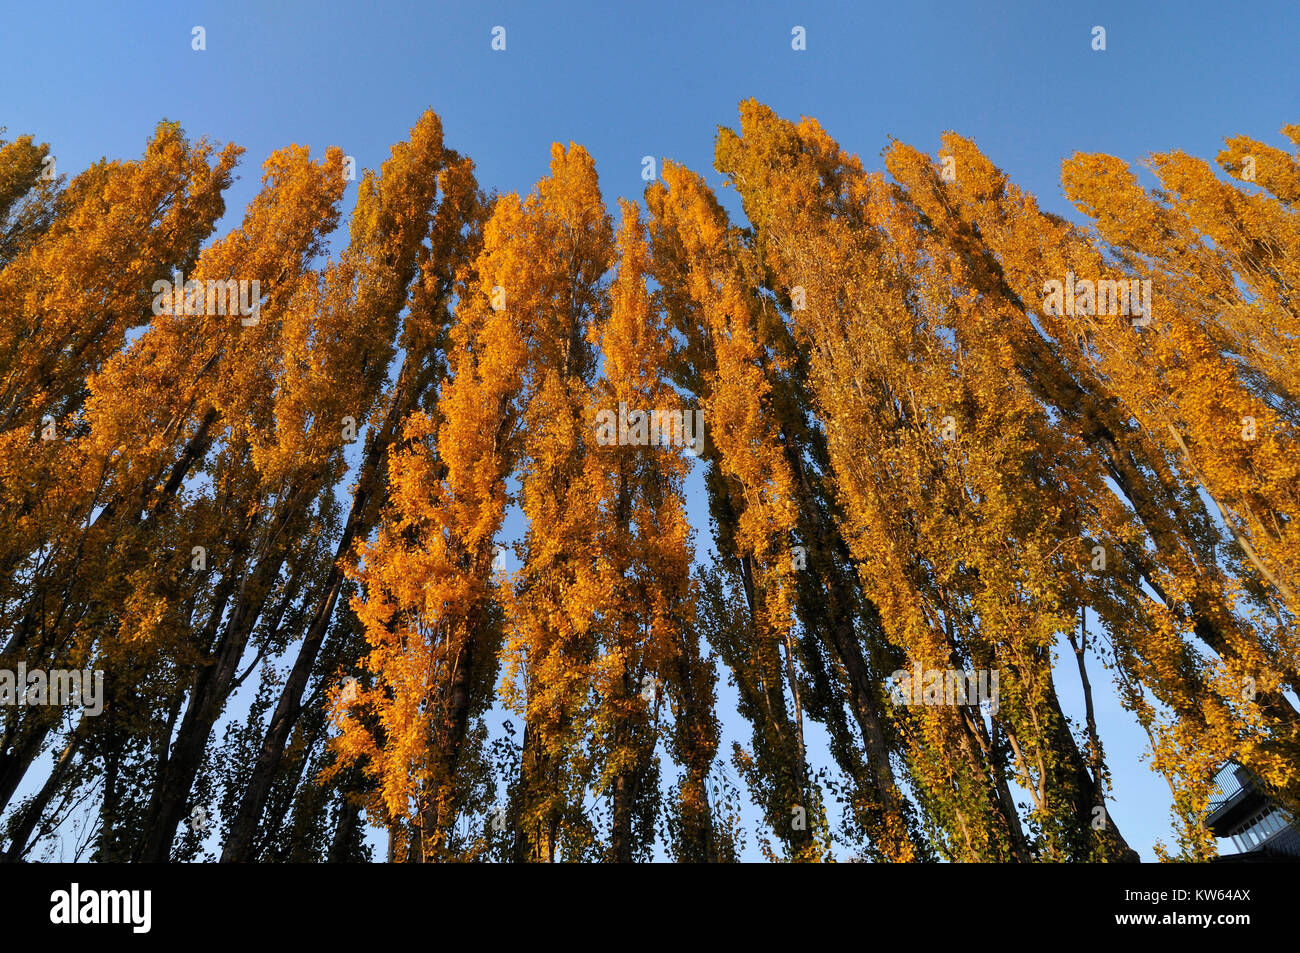 Poplars in autumn, Pappeln im Herbst Stock Photo